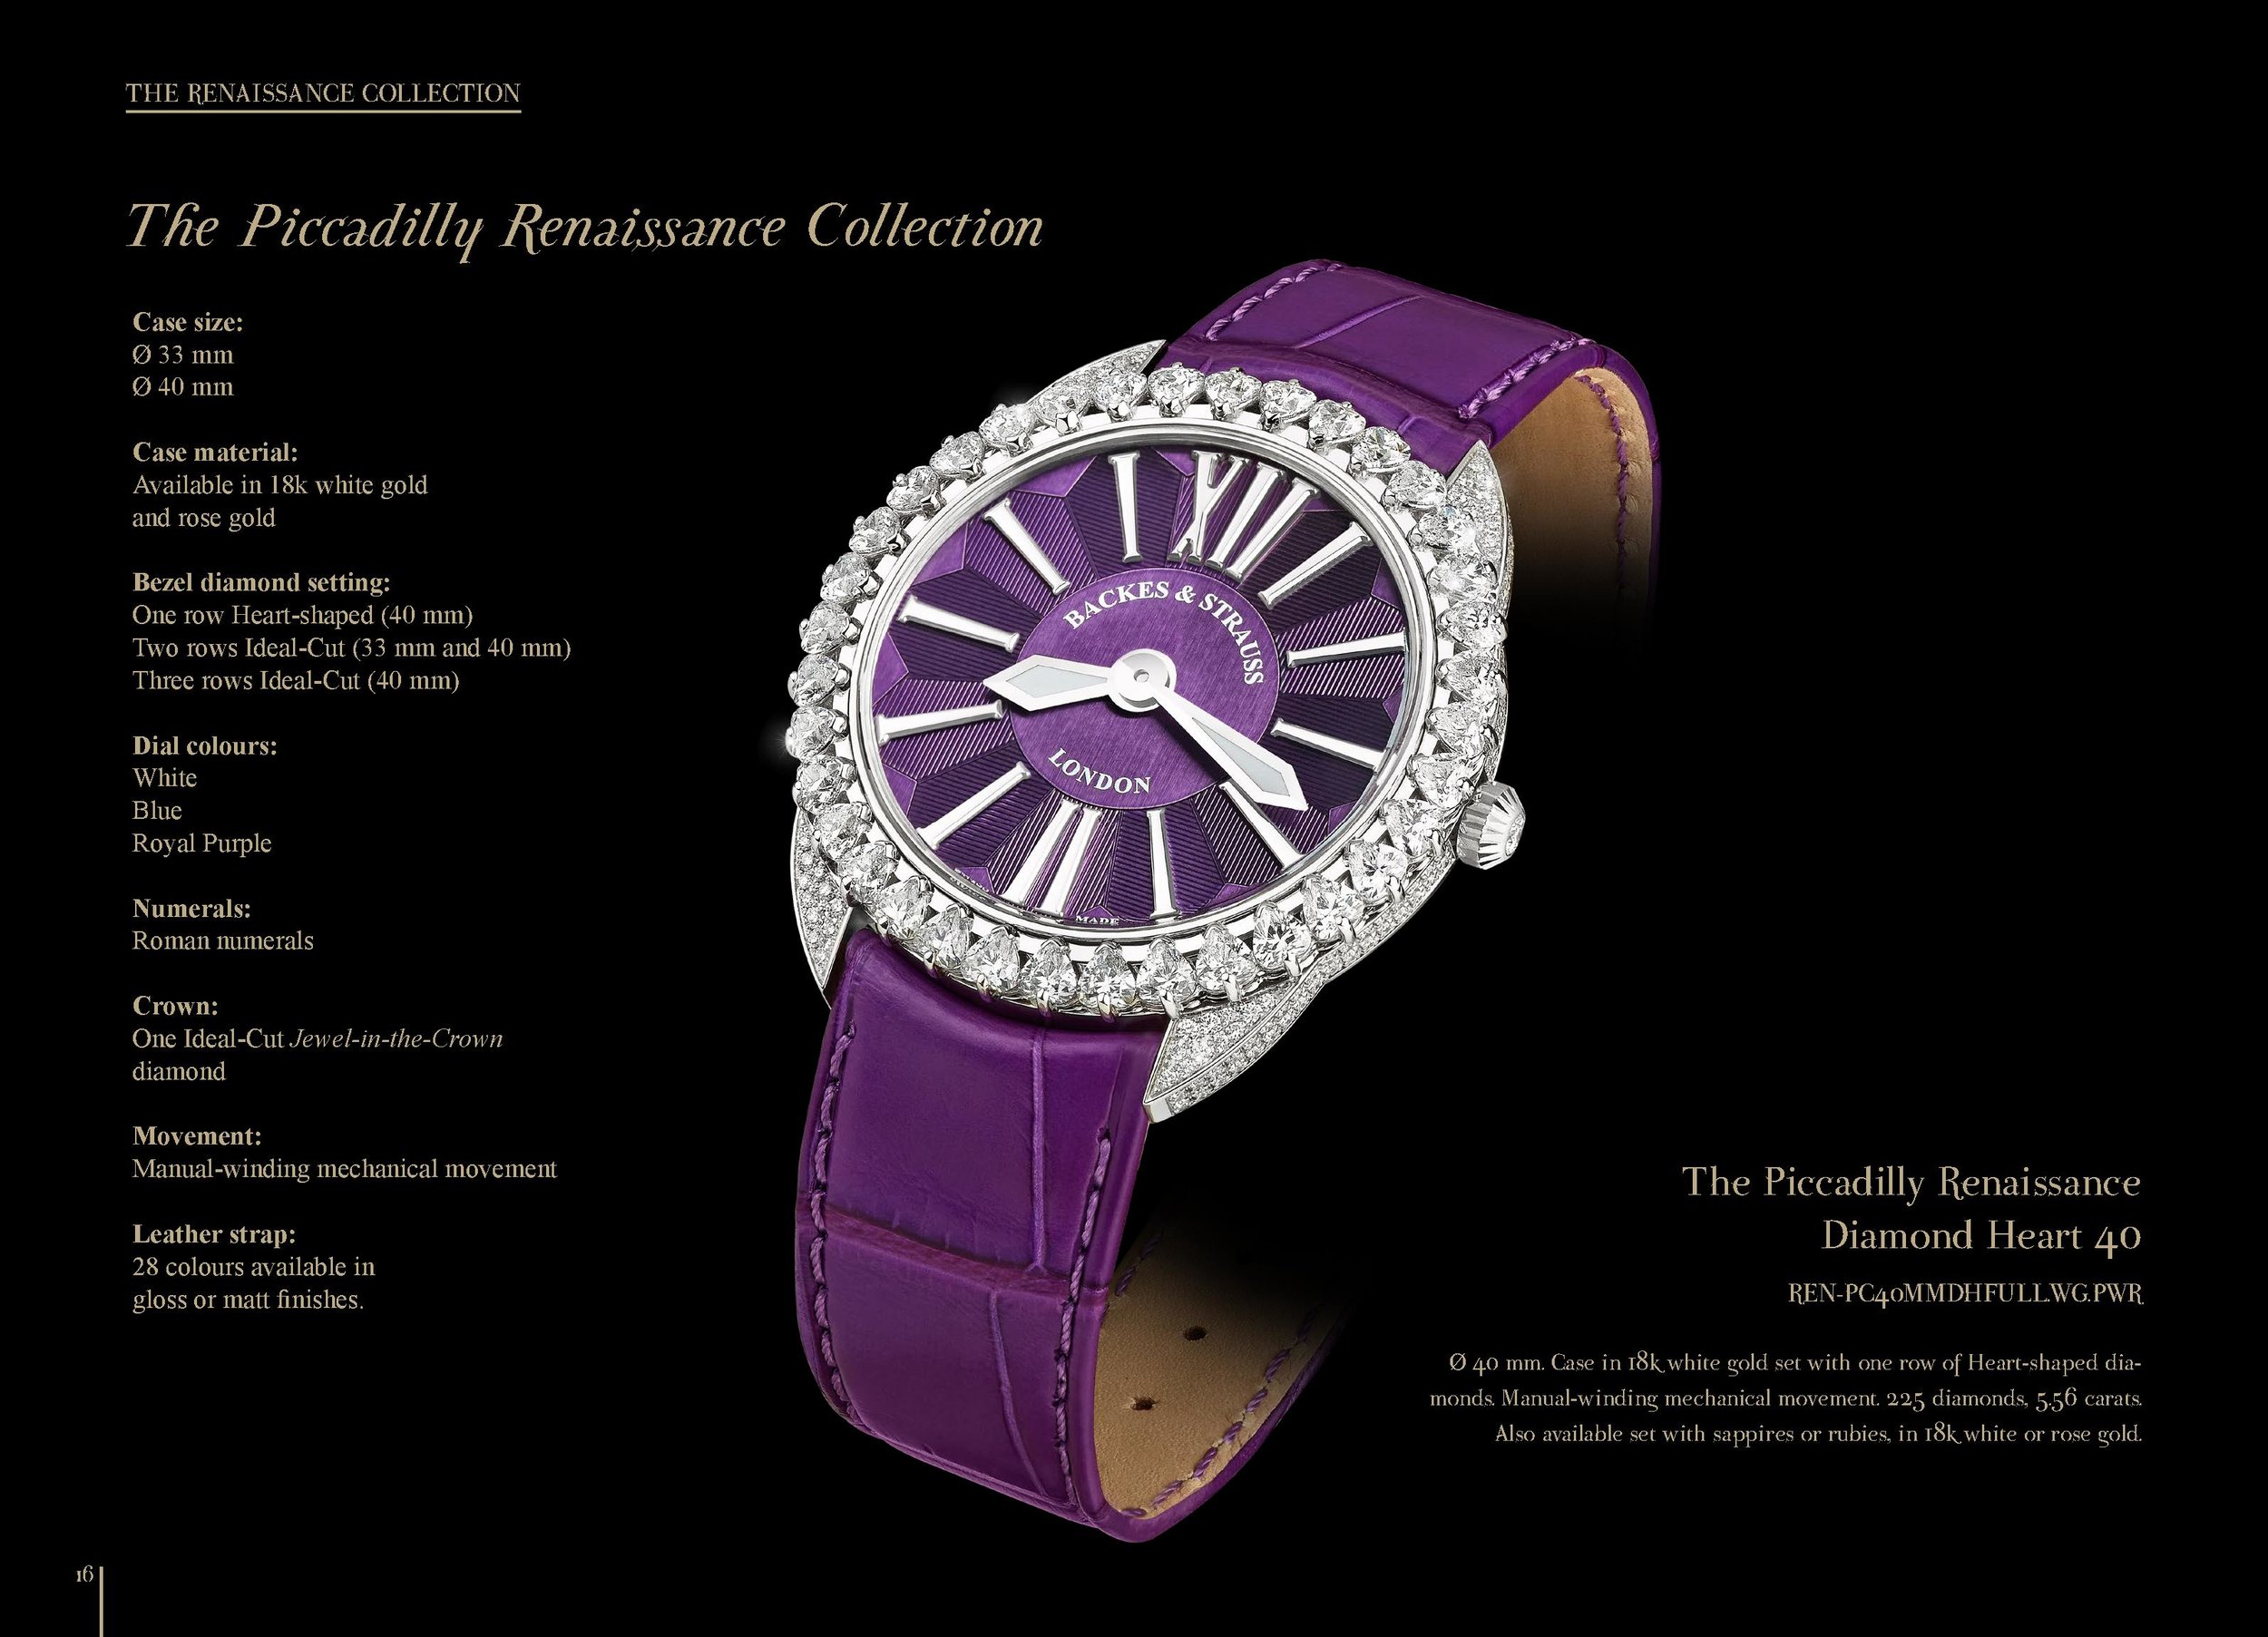 Piccadilly Renaissance Diamond Heart 40 watch